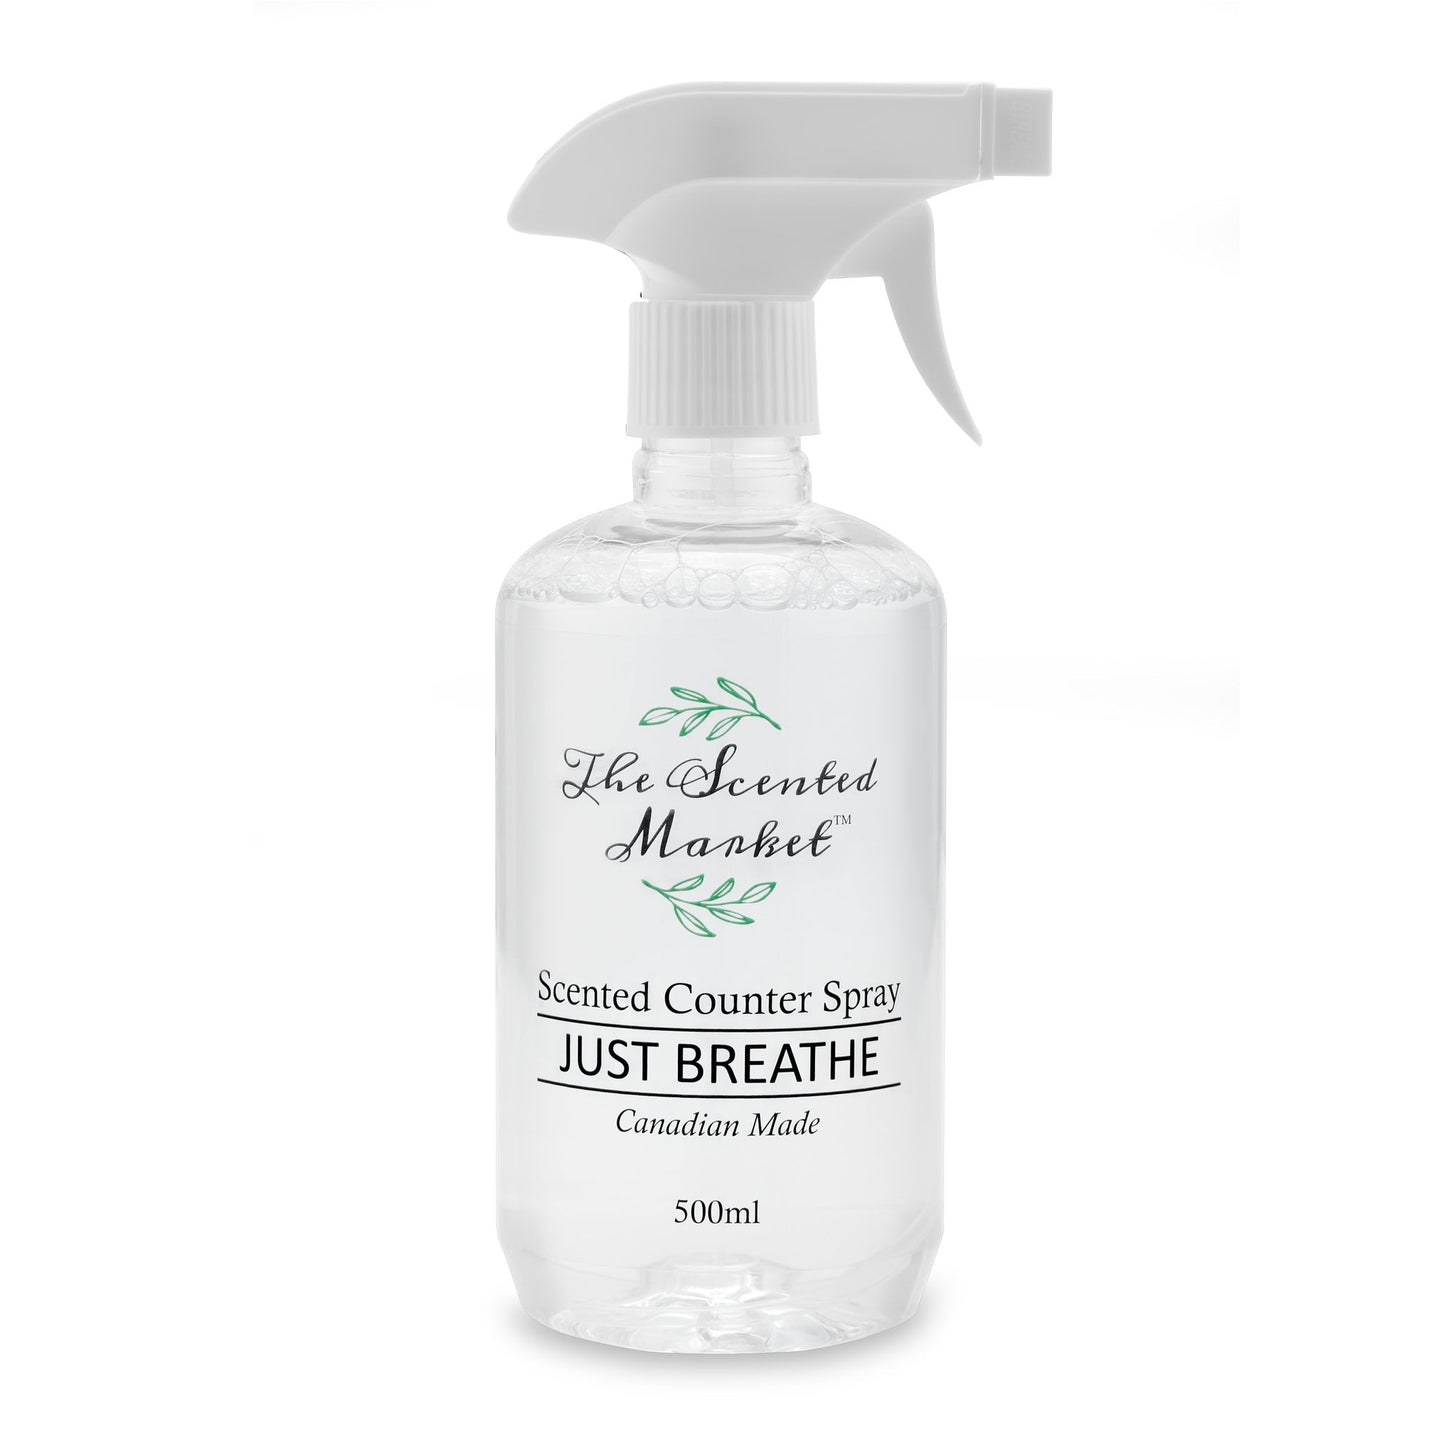 Just Breathe Counter Spray